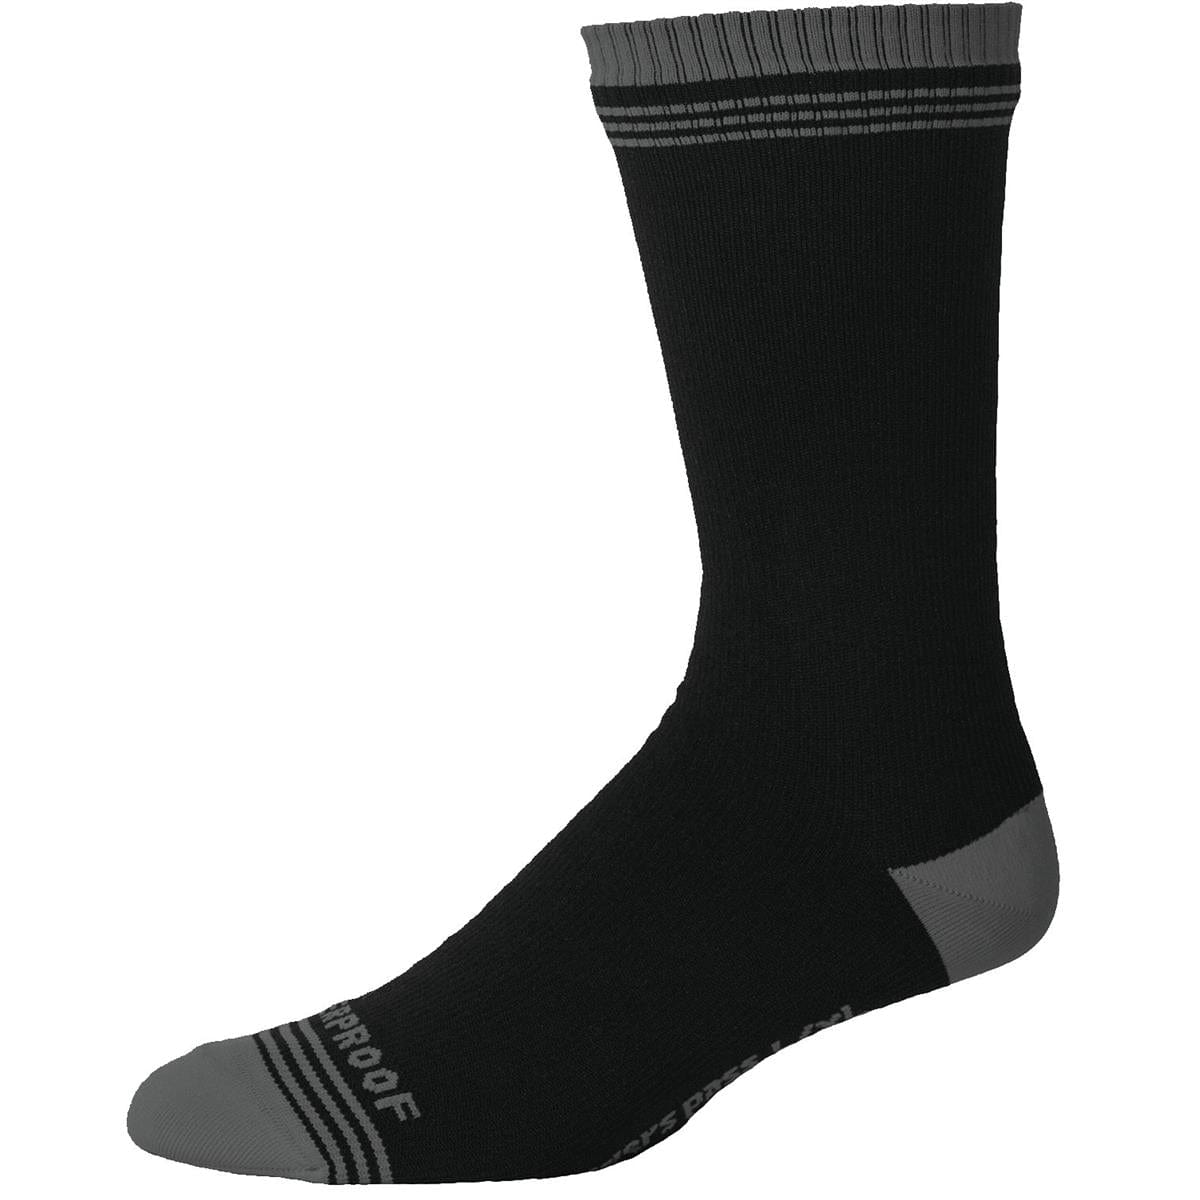 Showers Pass® Crosspoint Midweight Waterproof Socks, 1 Pair